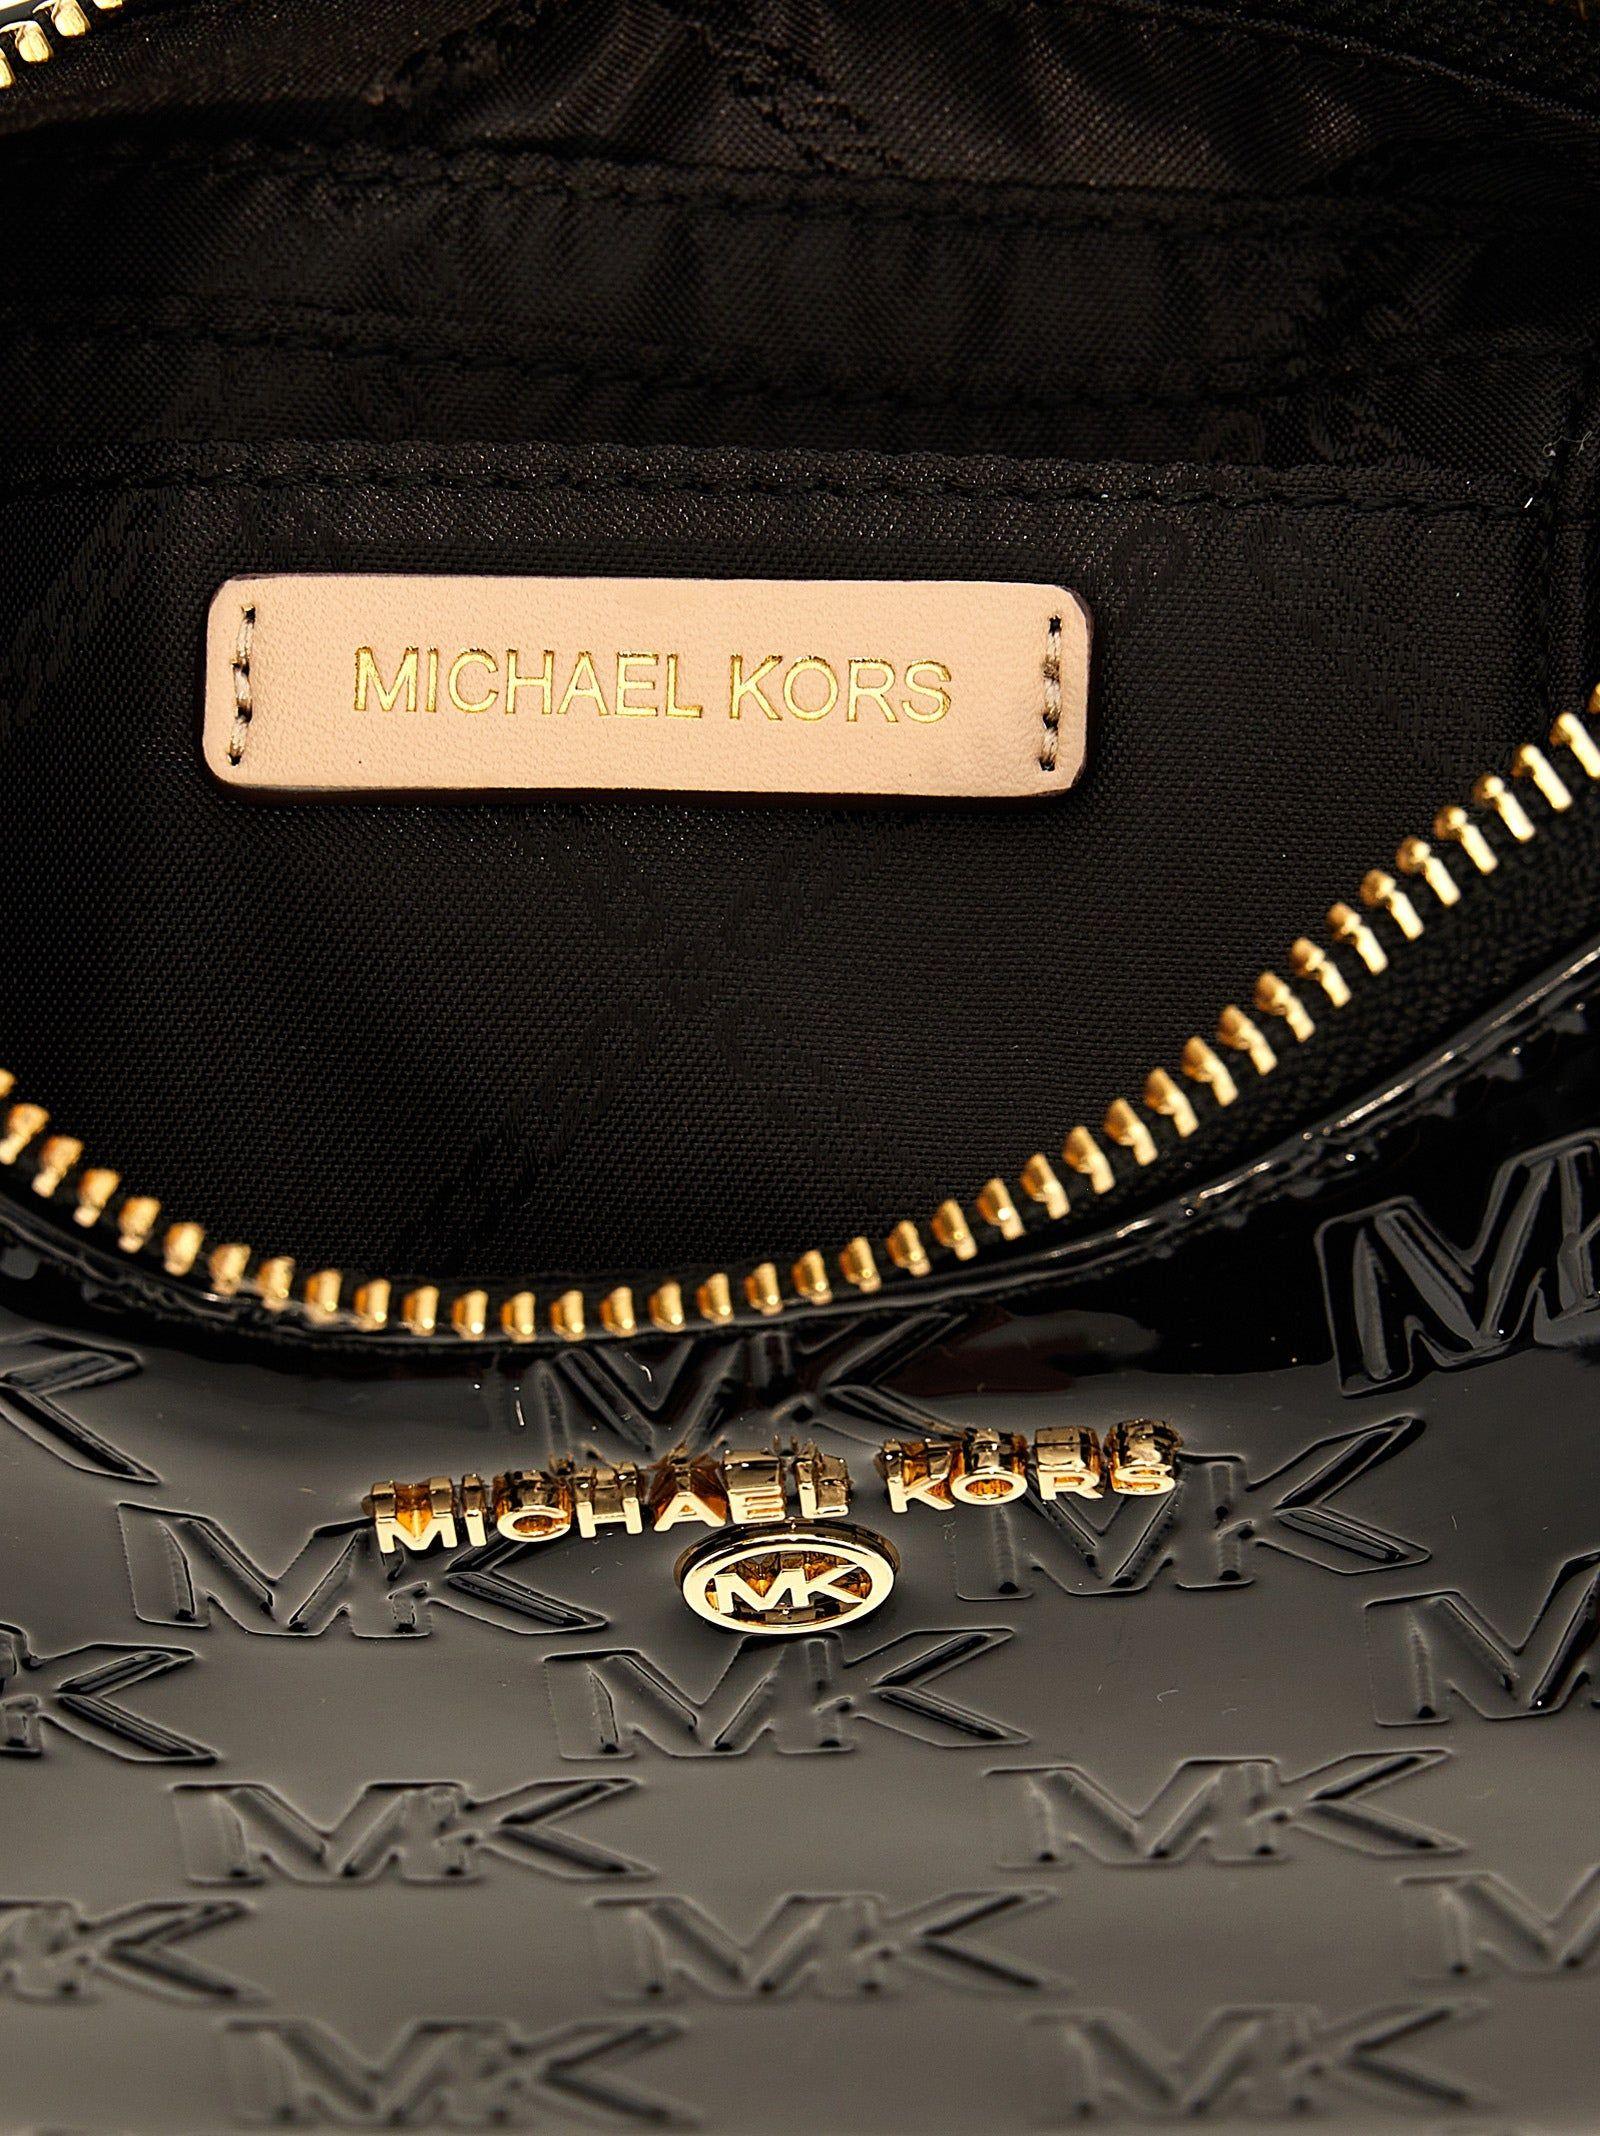 Michael Kors Large Shelly Studded Lamb Leather Chain Hand Bag Purse Black  Gold | eBay